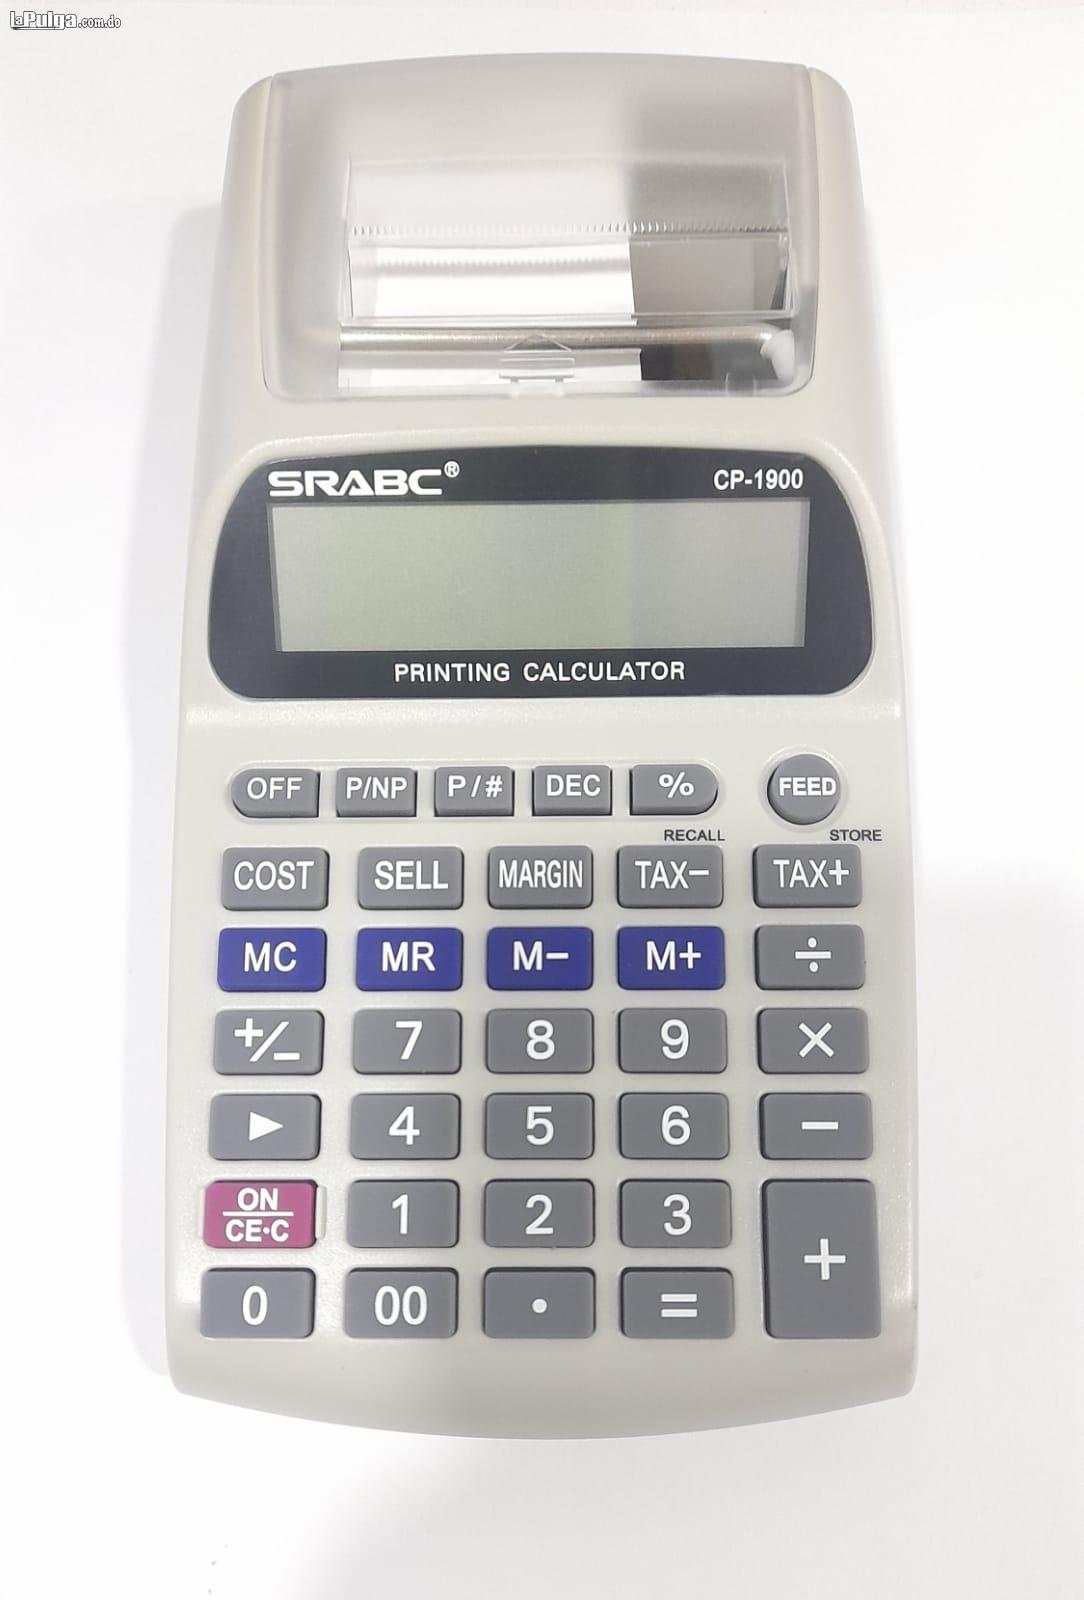 Calculadora impresora SRABC con papel profesional calculo digito Tax Foto 7097712-3.jpg